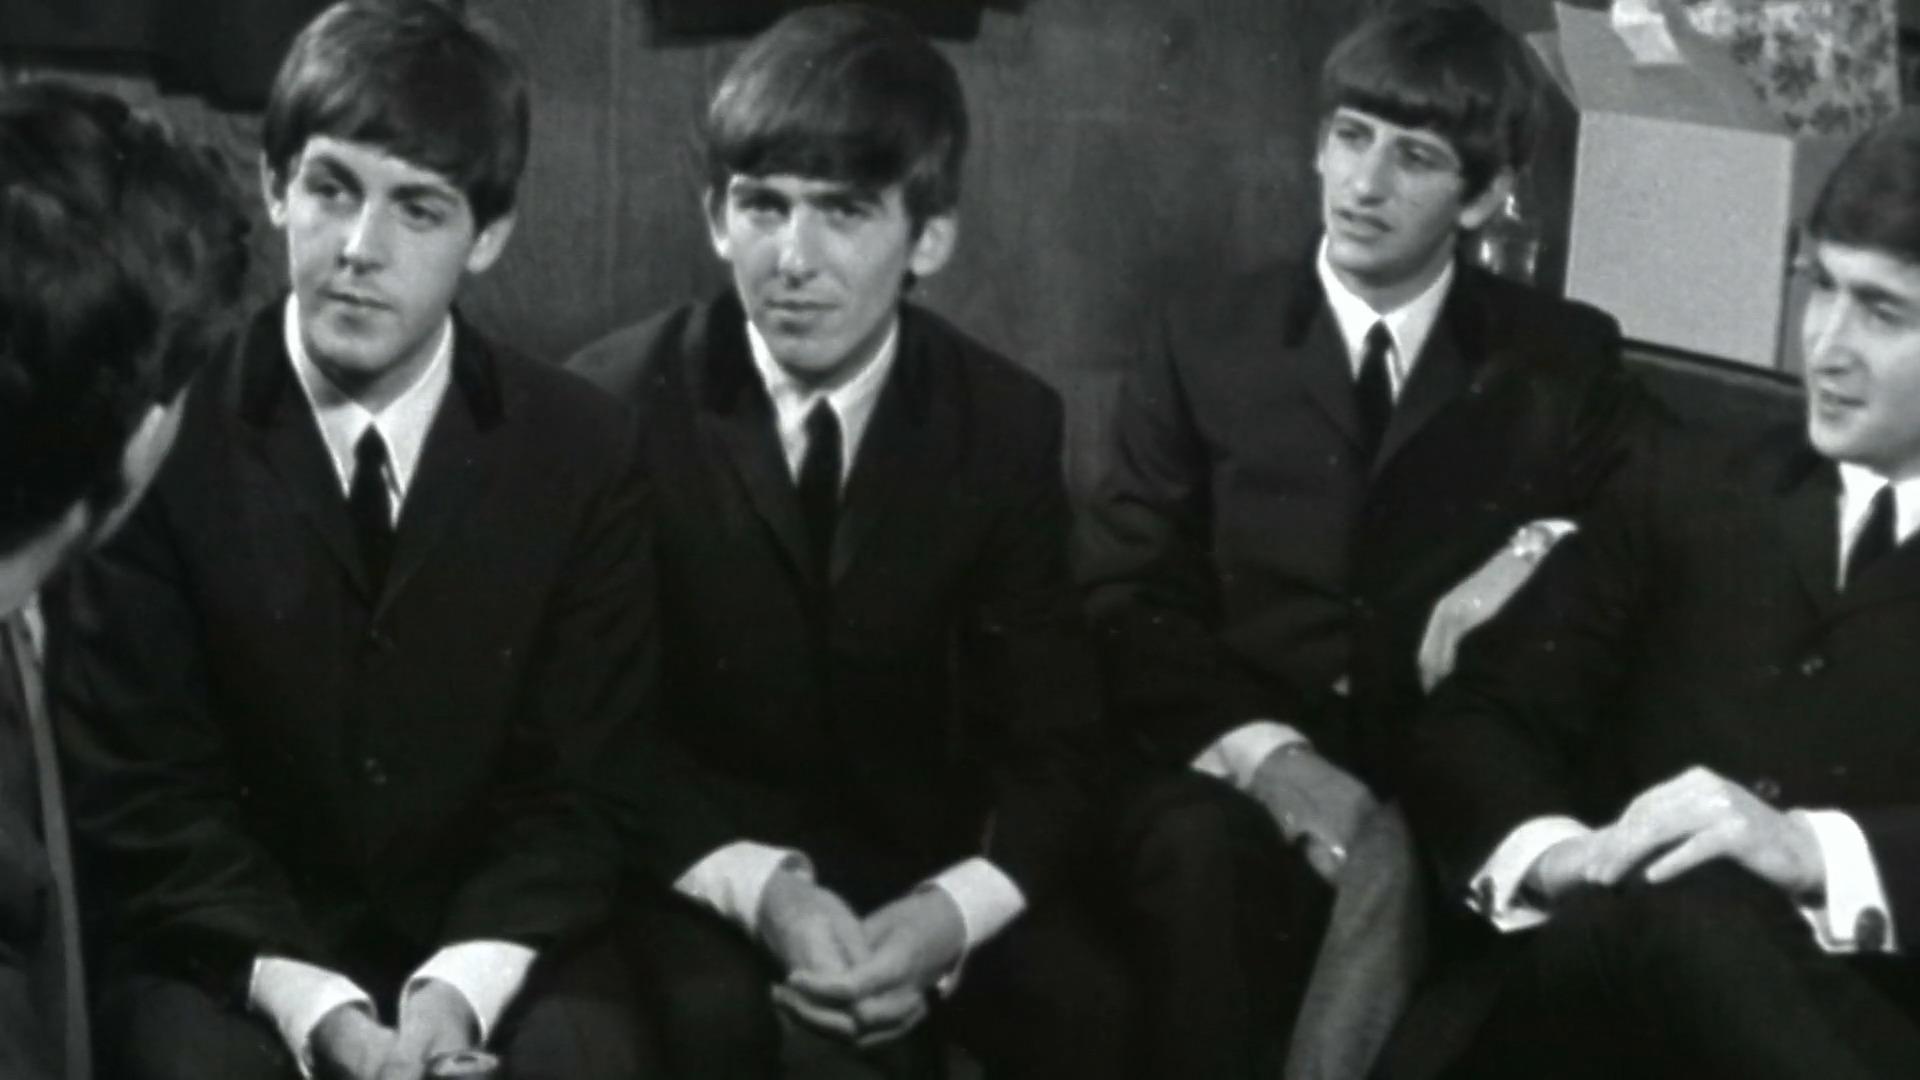 Beatles-Reunion zur Premiere ihrer Doku Paul McCartney & Ringo Starr